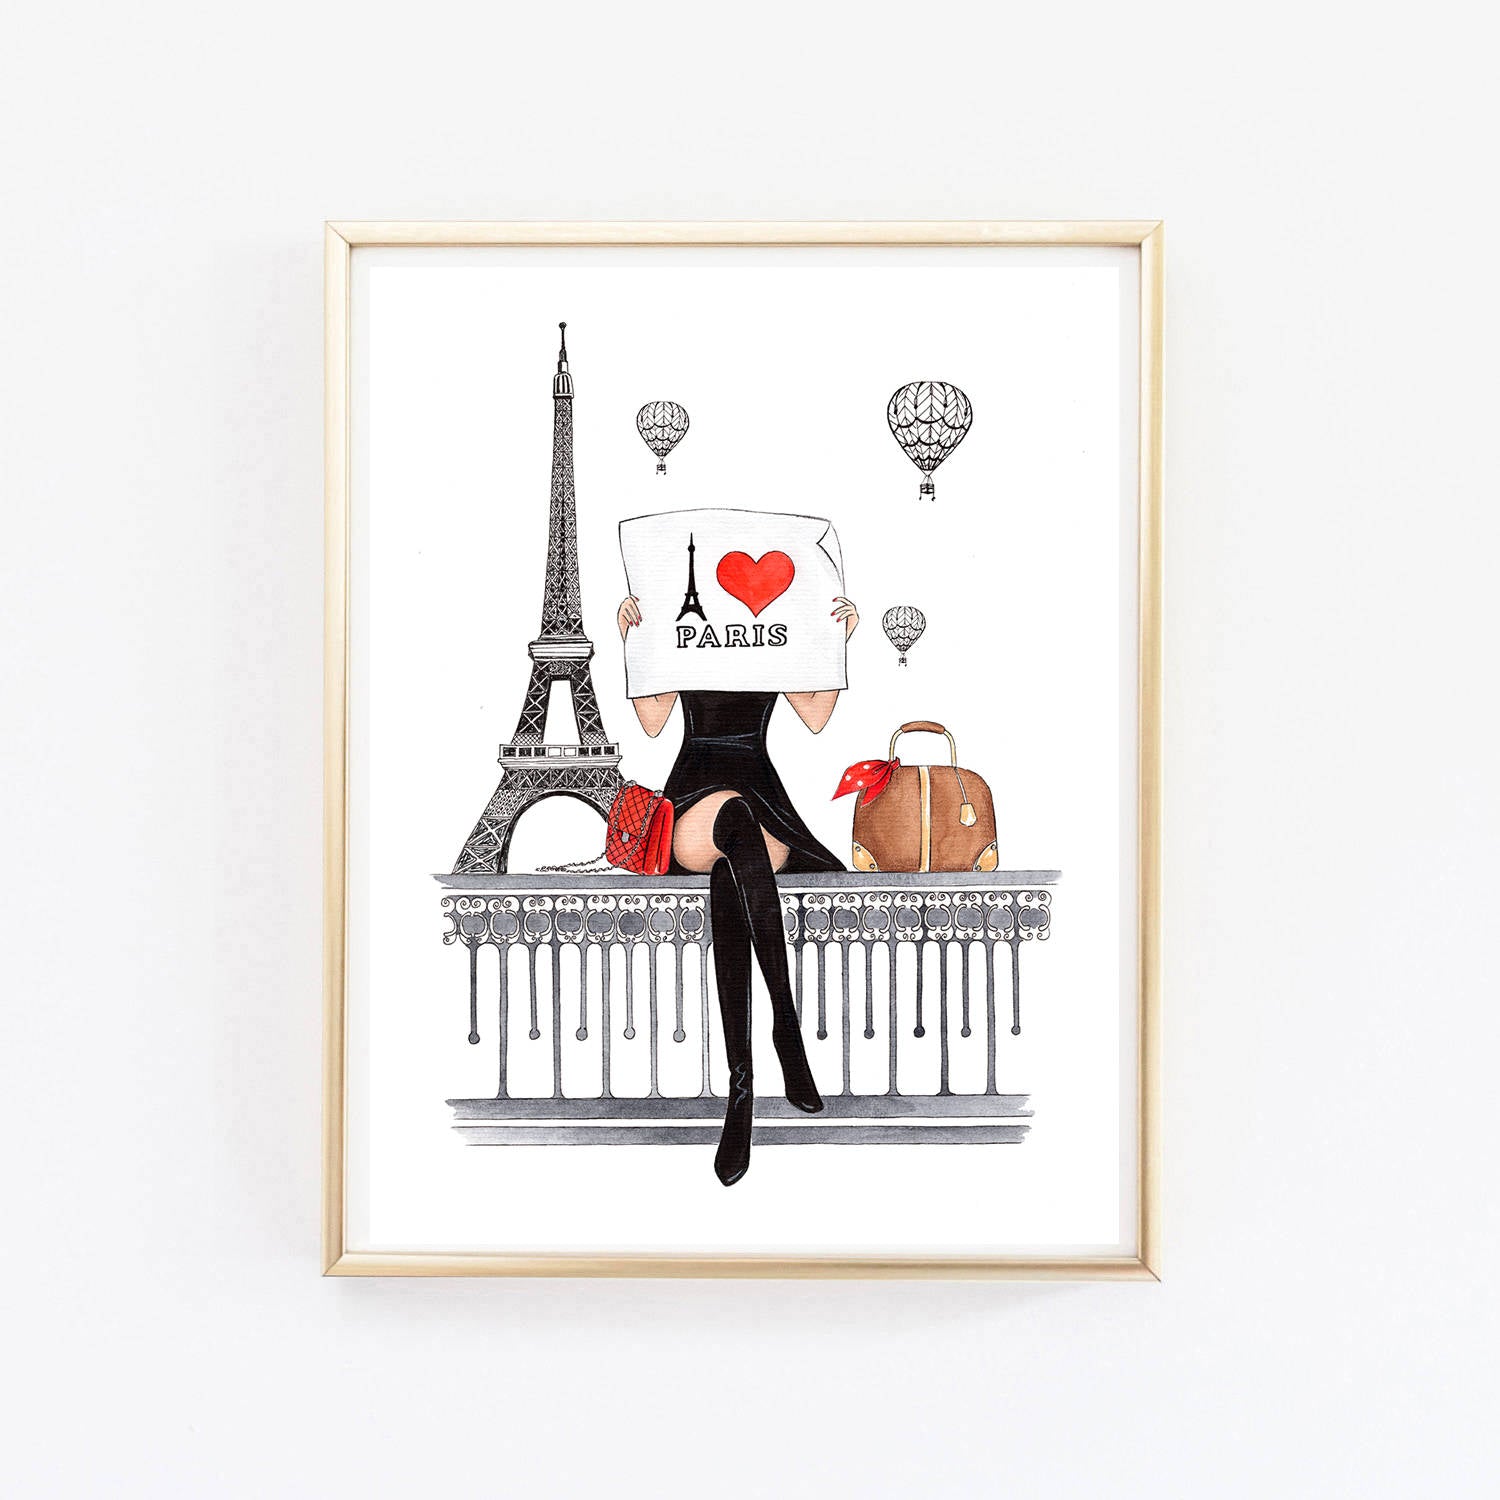 I love Paris art print fashion illustration